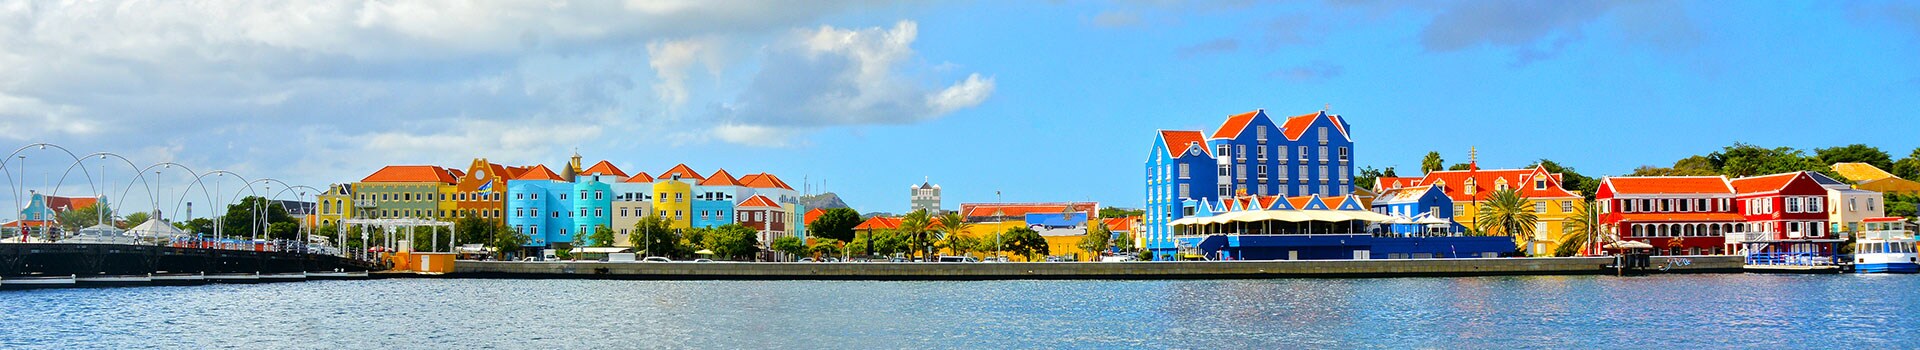 Lisbona - Willemstad